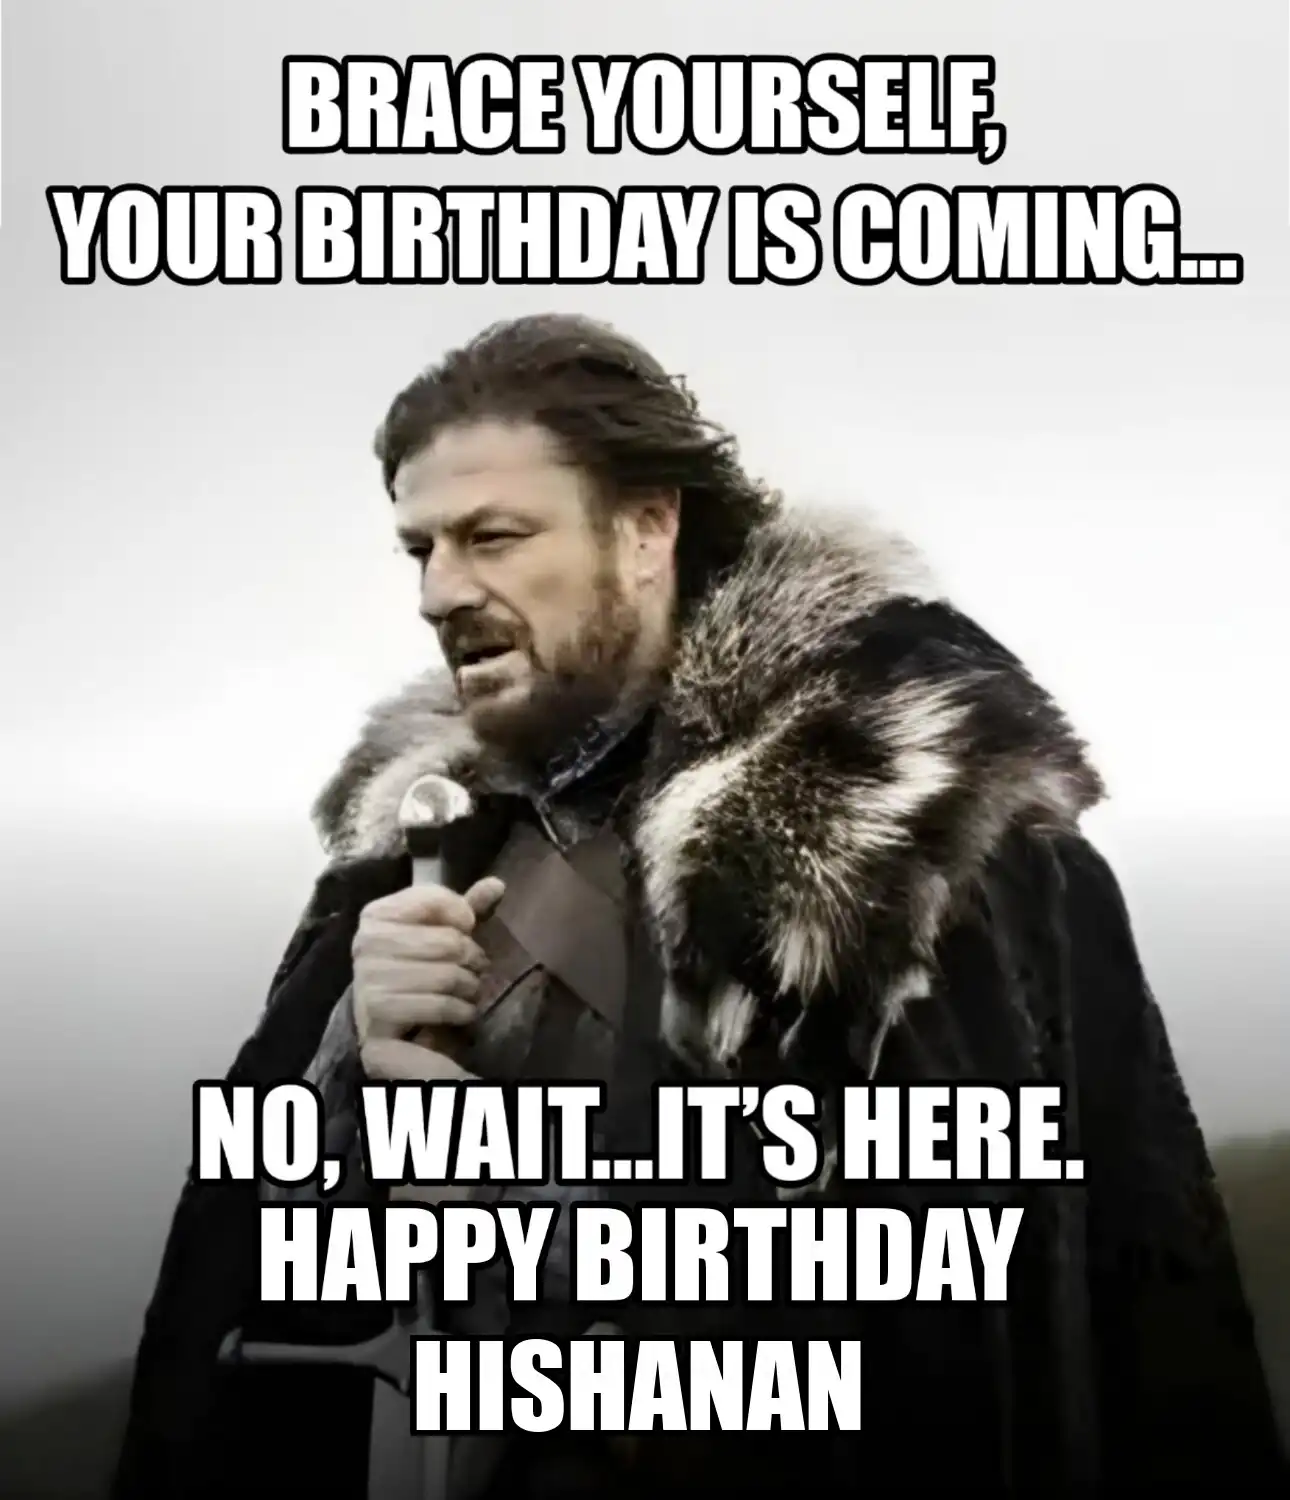 Happy Birthday Hishanan Brace Yourself Your Birthday Is Coming Meme